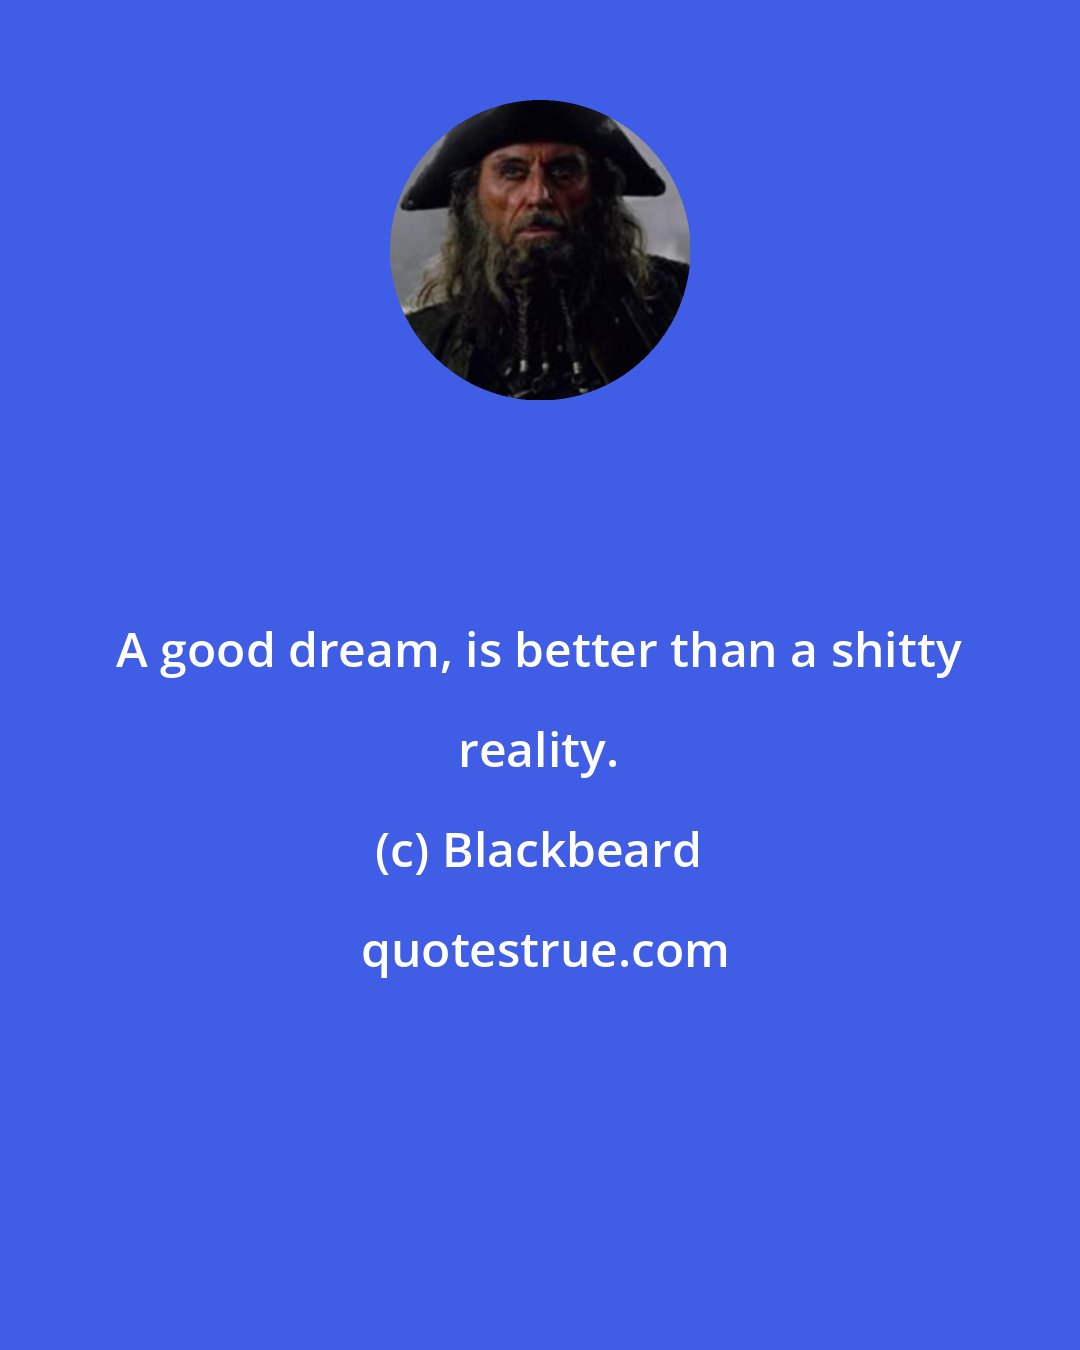 Blackbeard: A good dream, is better than a shitty reality.